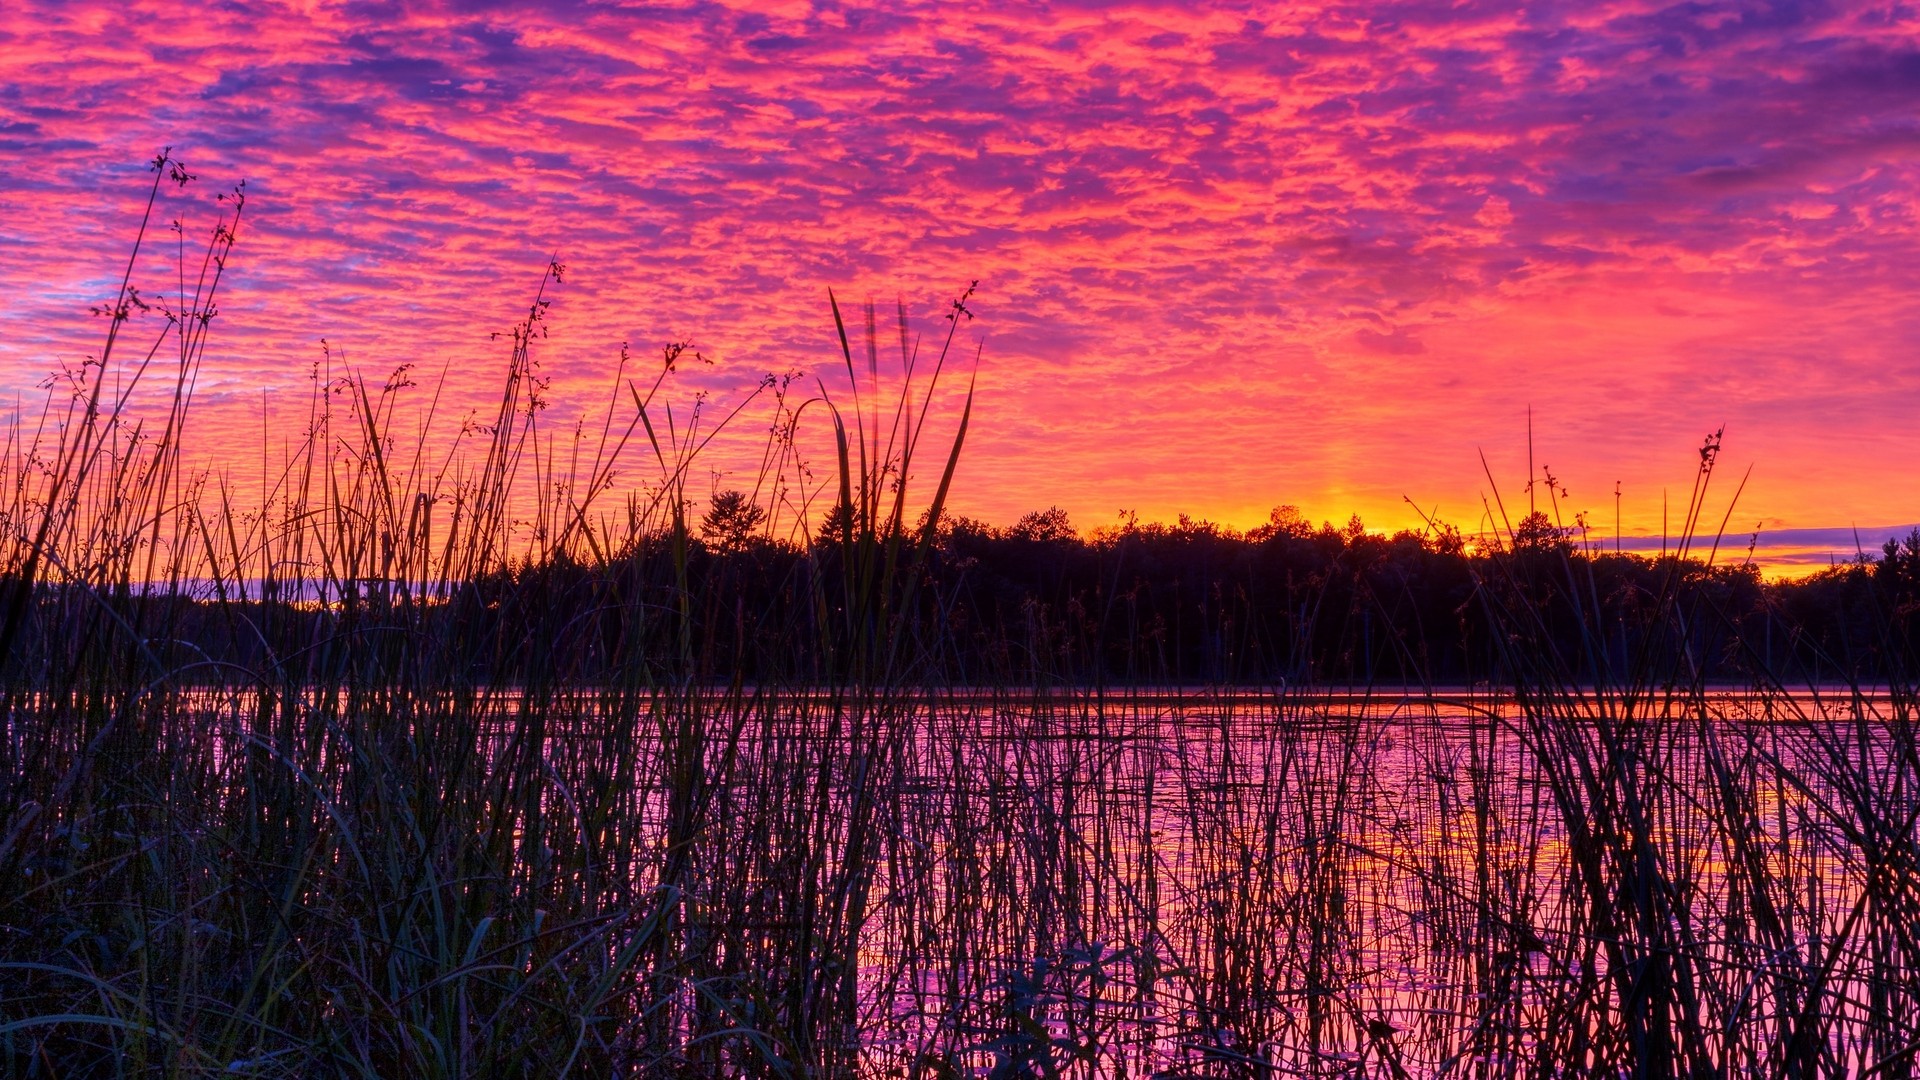 1920x1080 wallpapers: lake, reed, sunset, purple (image)